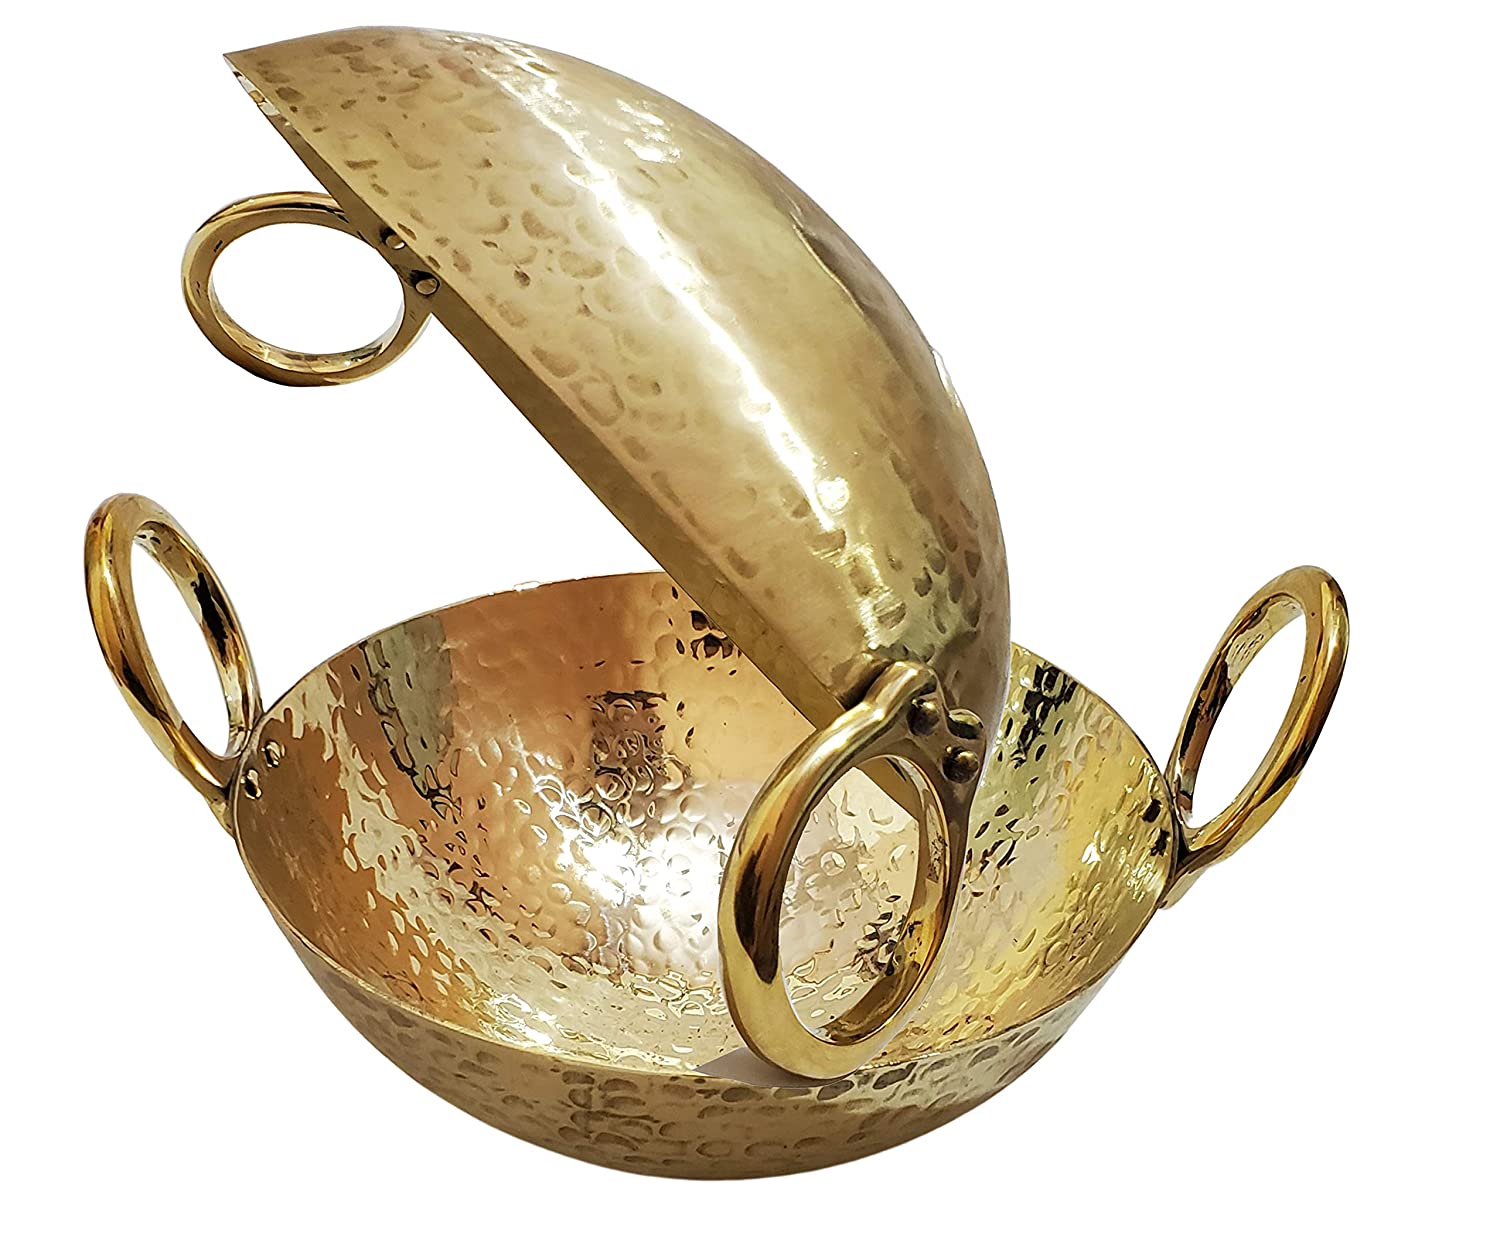 Pure Source India Brass Kadhai Gold, 2.5 L (Brass Kadai 10 x 3.5 Inch) –  Pure Source India